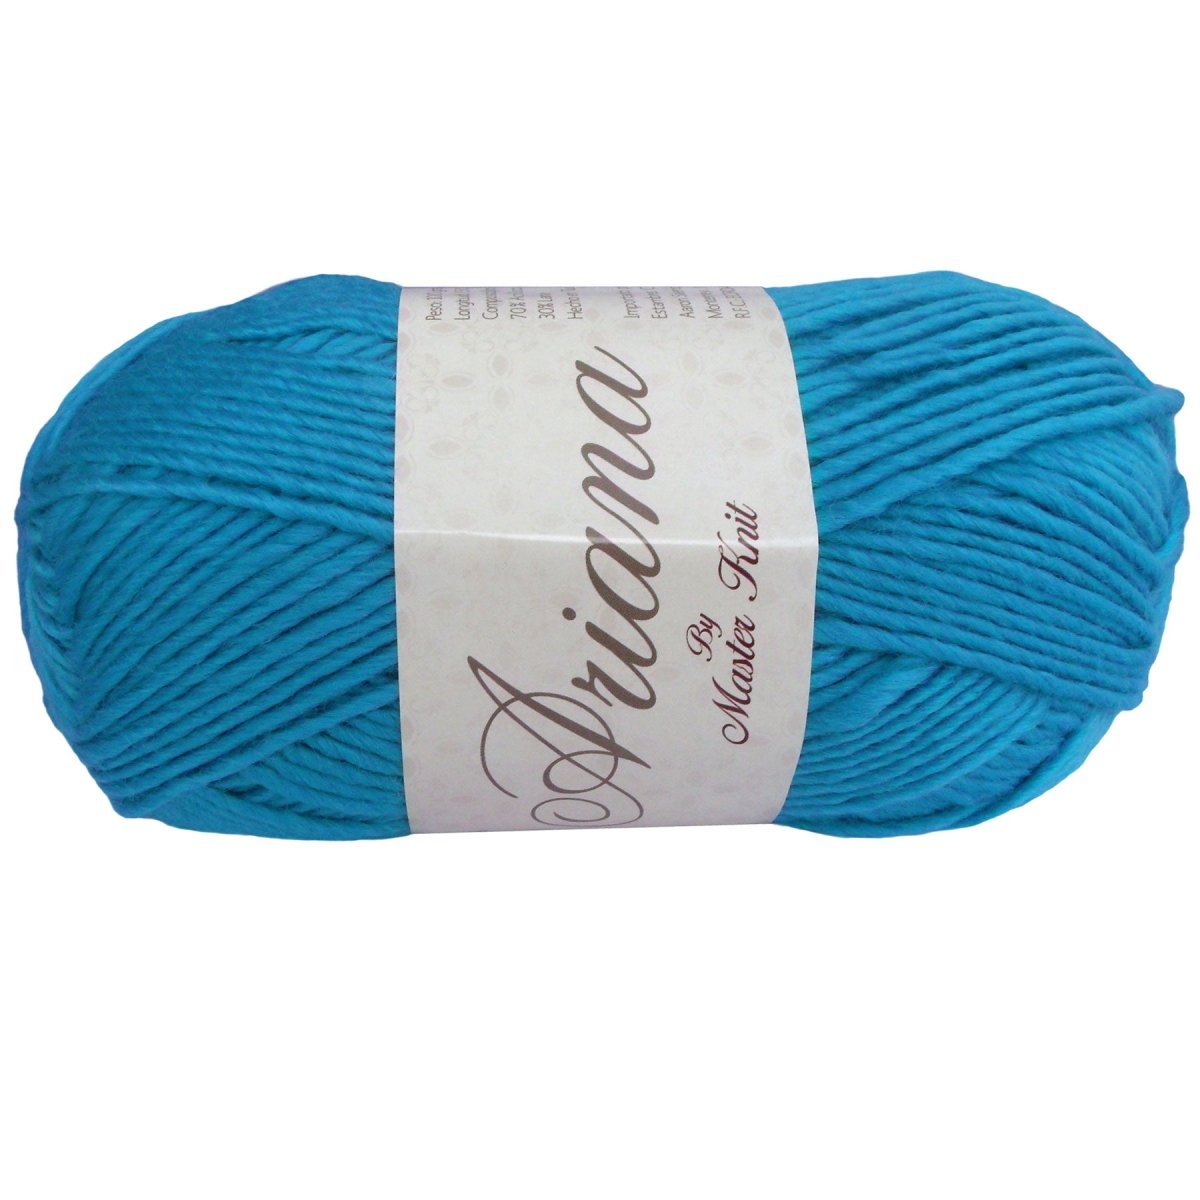 ARIANA - Aran - Crochetstores9510-235